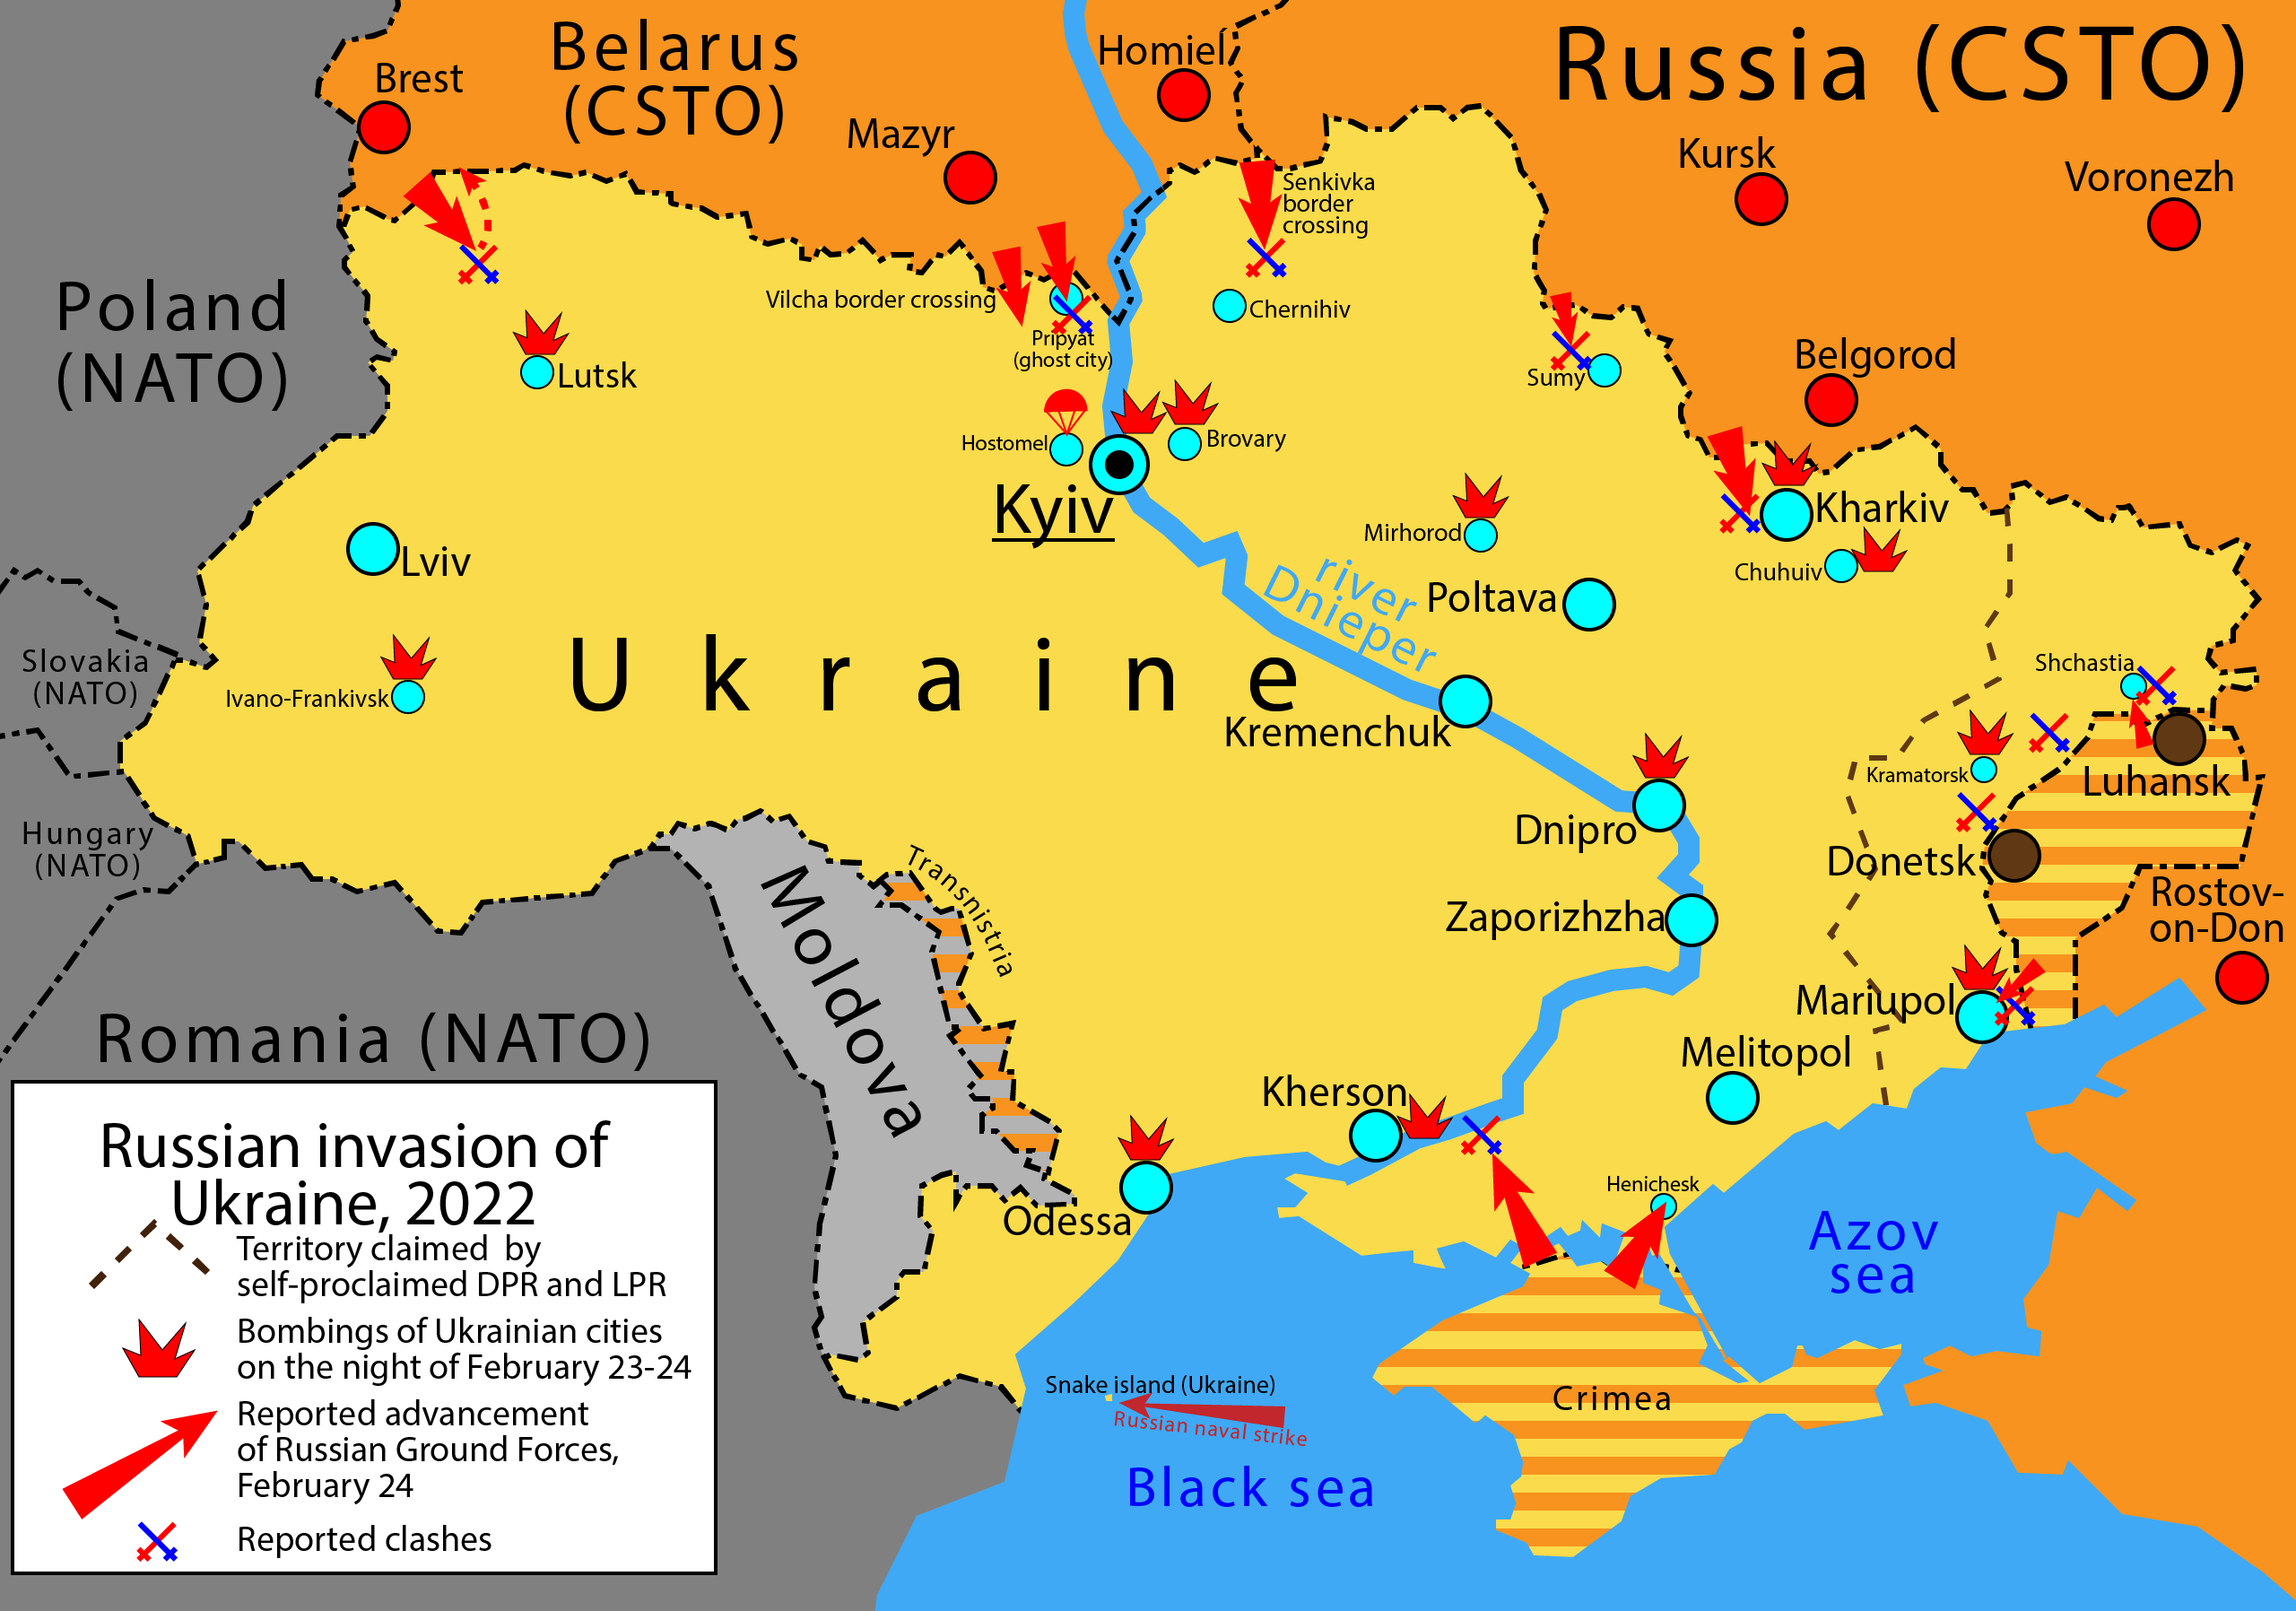 2022 Russian invasion of Ukraine – invasion of Ukraine by Russia starting on 24 February 2022